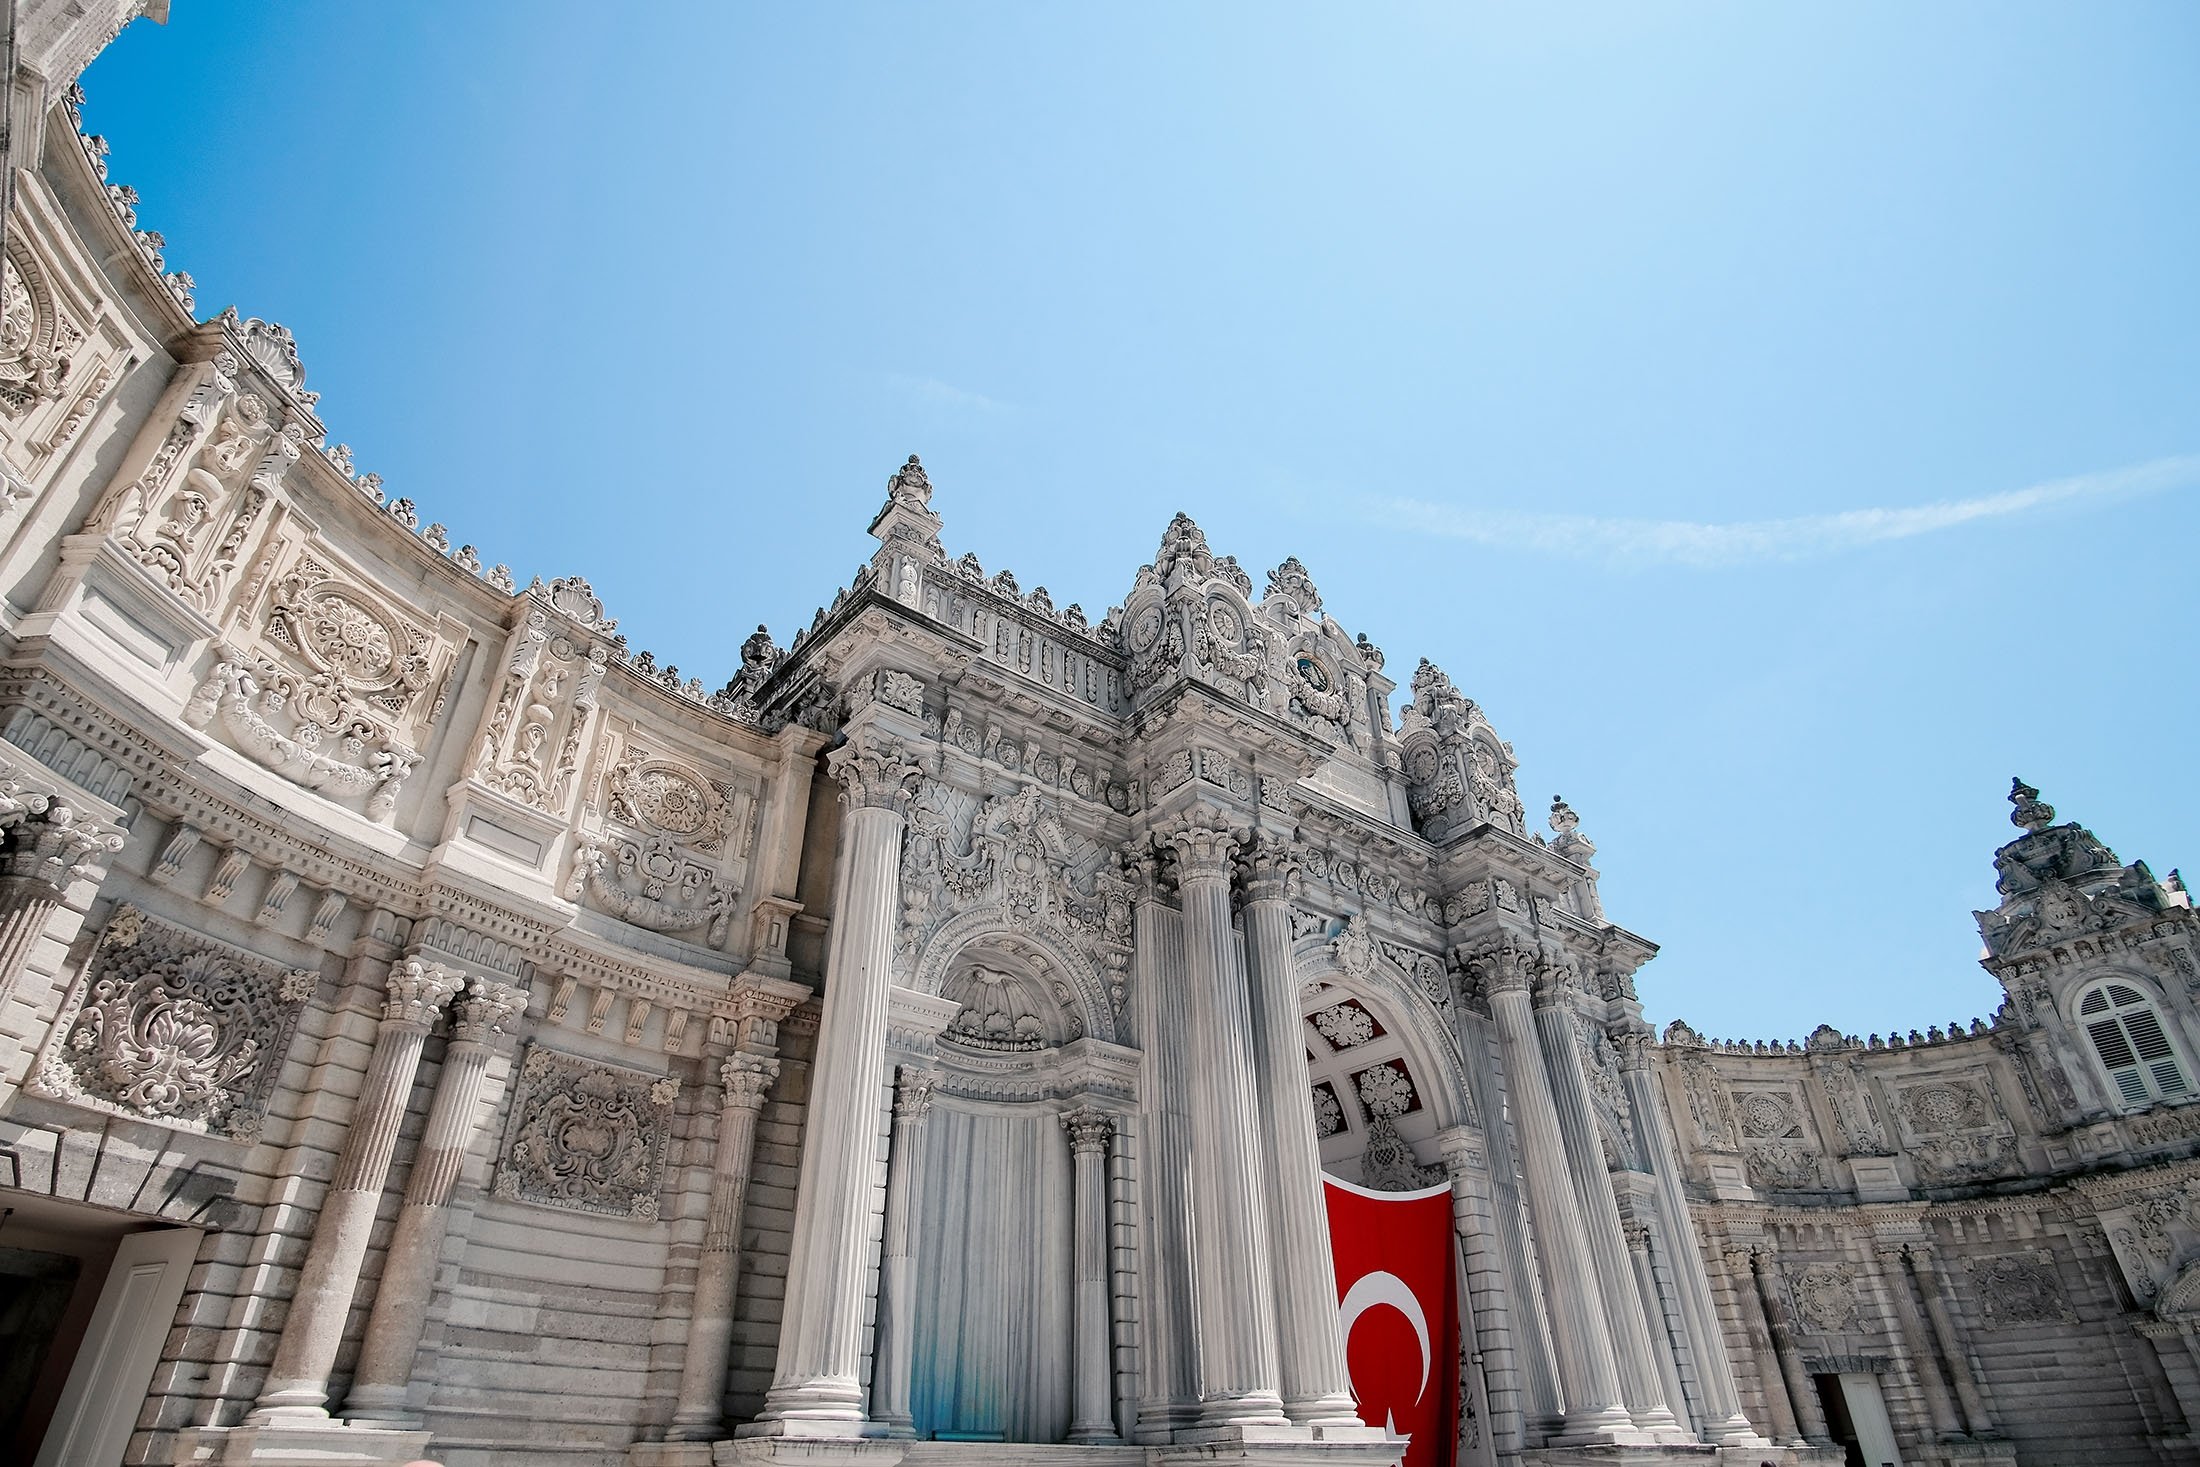 The gate entrance of Dolmabahçe Palace. (Shutterstock Photo)